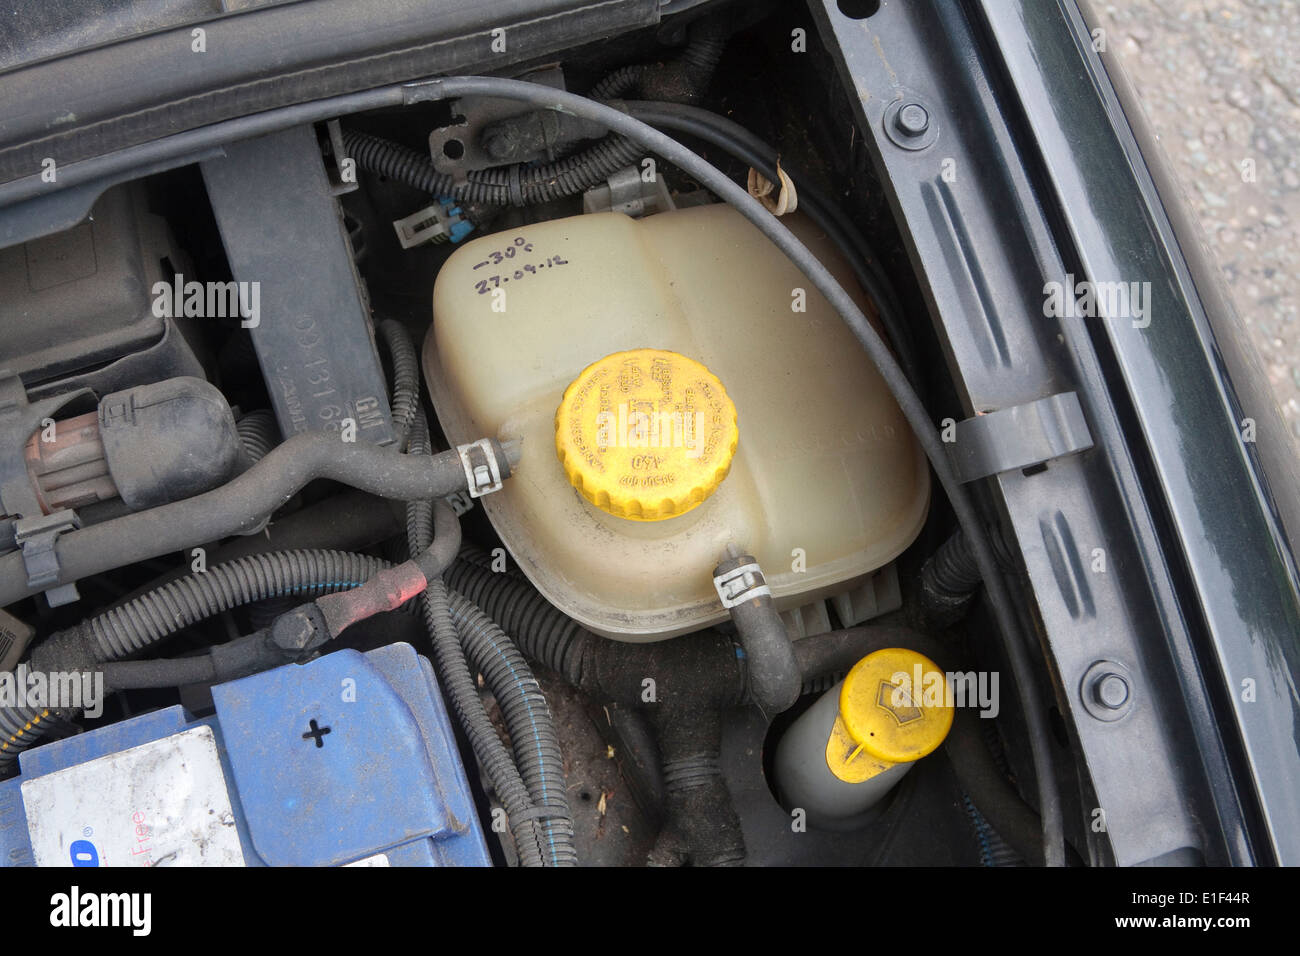 Car water coolant sump tank Stock Photo